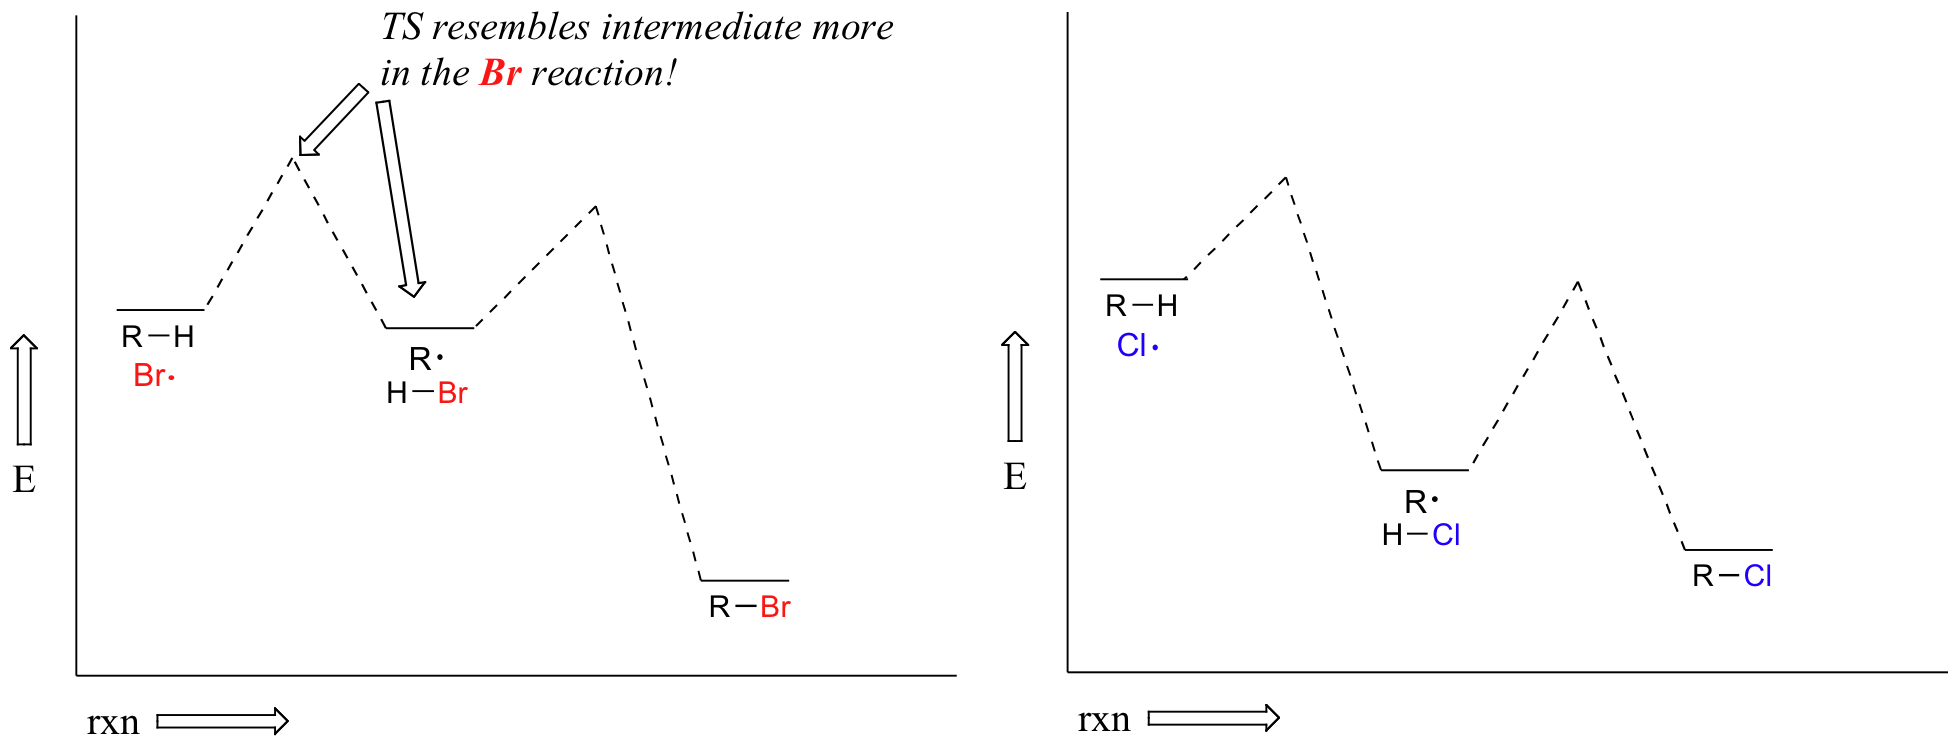 helium atom diagram. helium atom diagram. Plane oct has five Write all possible as a p-c Chemistry question; Plane oct has five Write all possible as a p-c Chemistry question